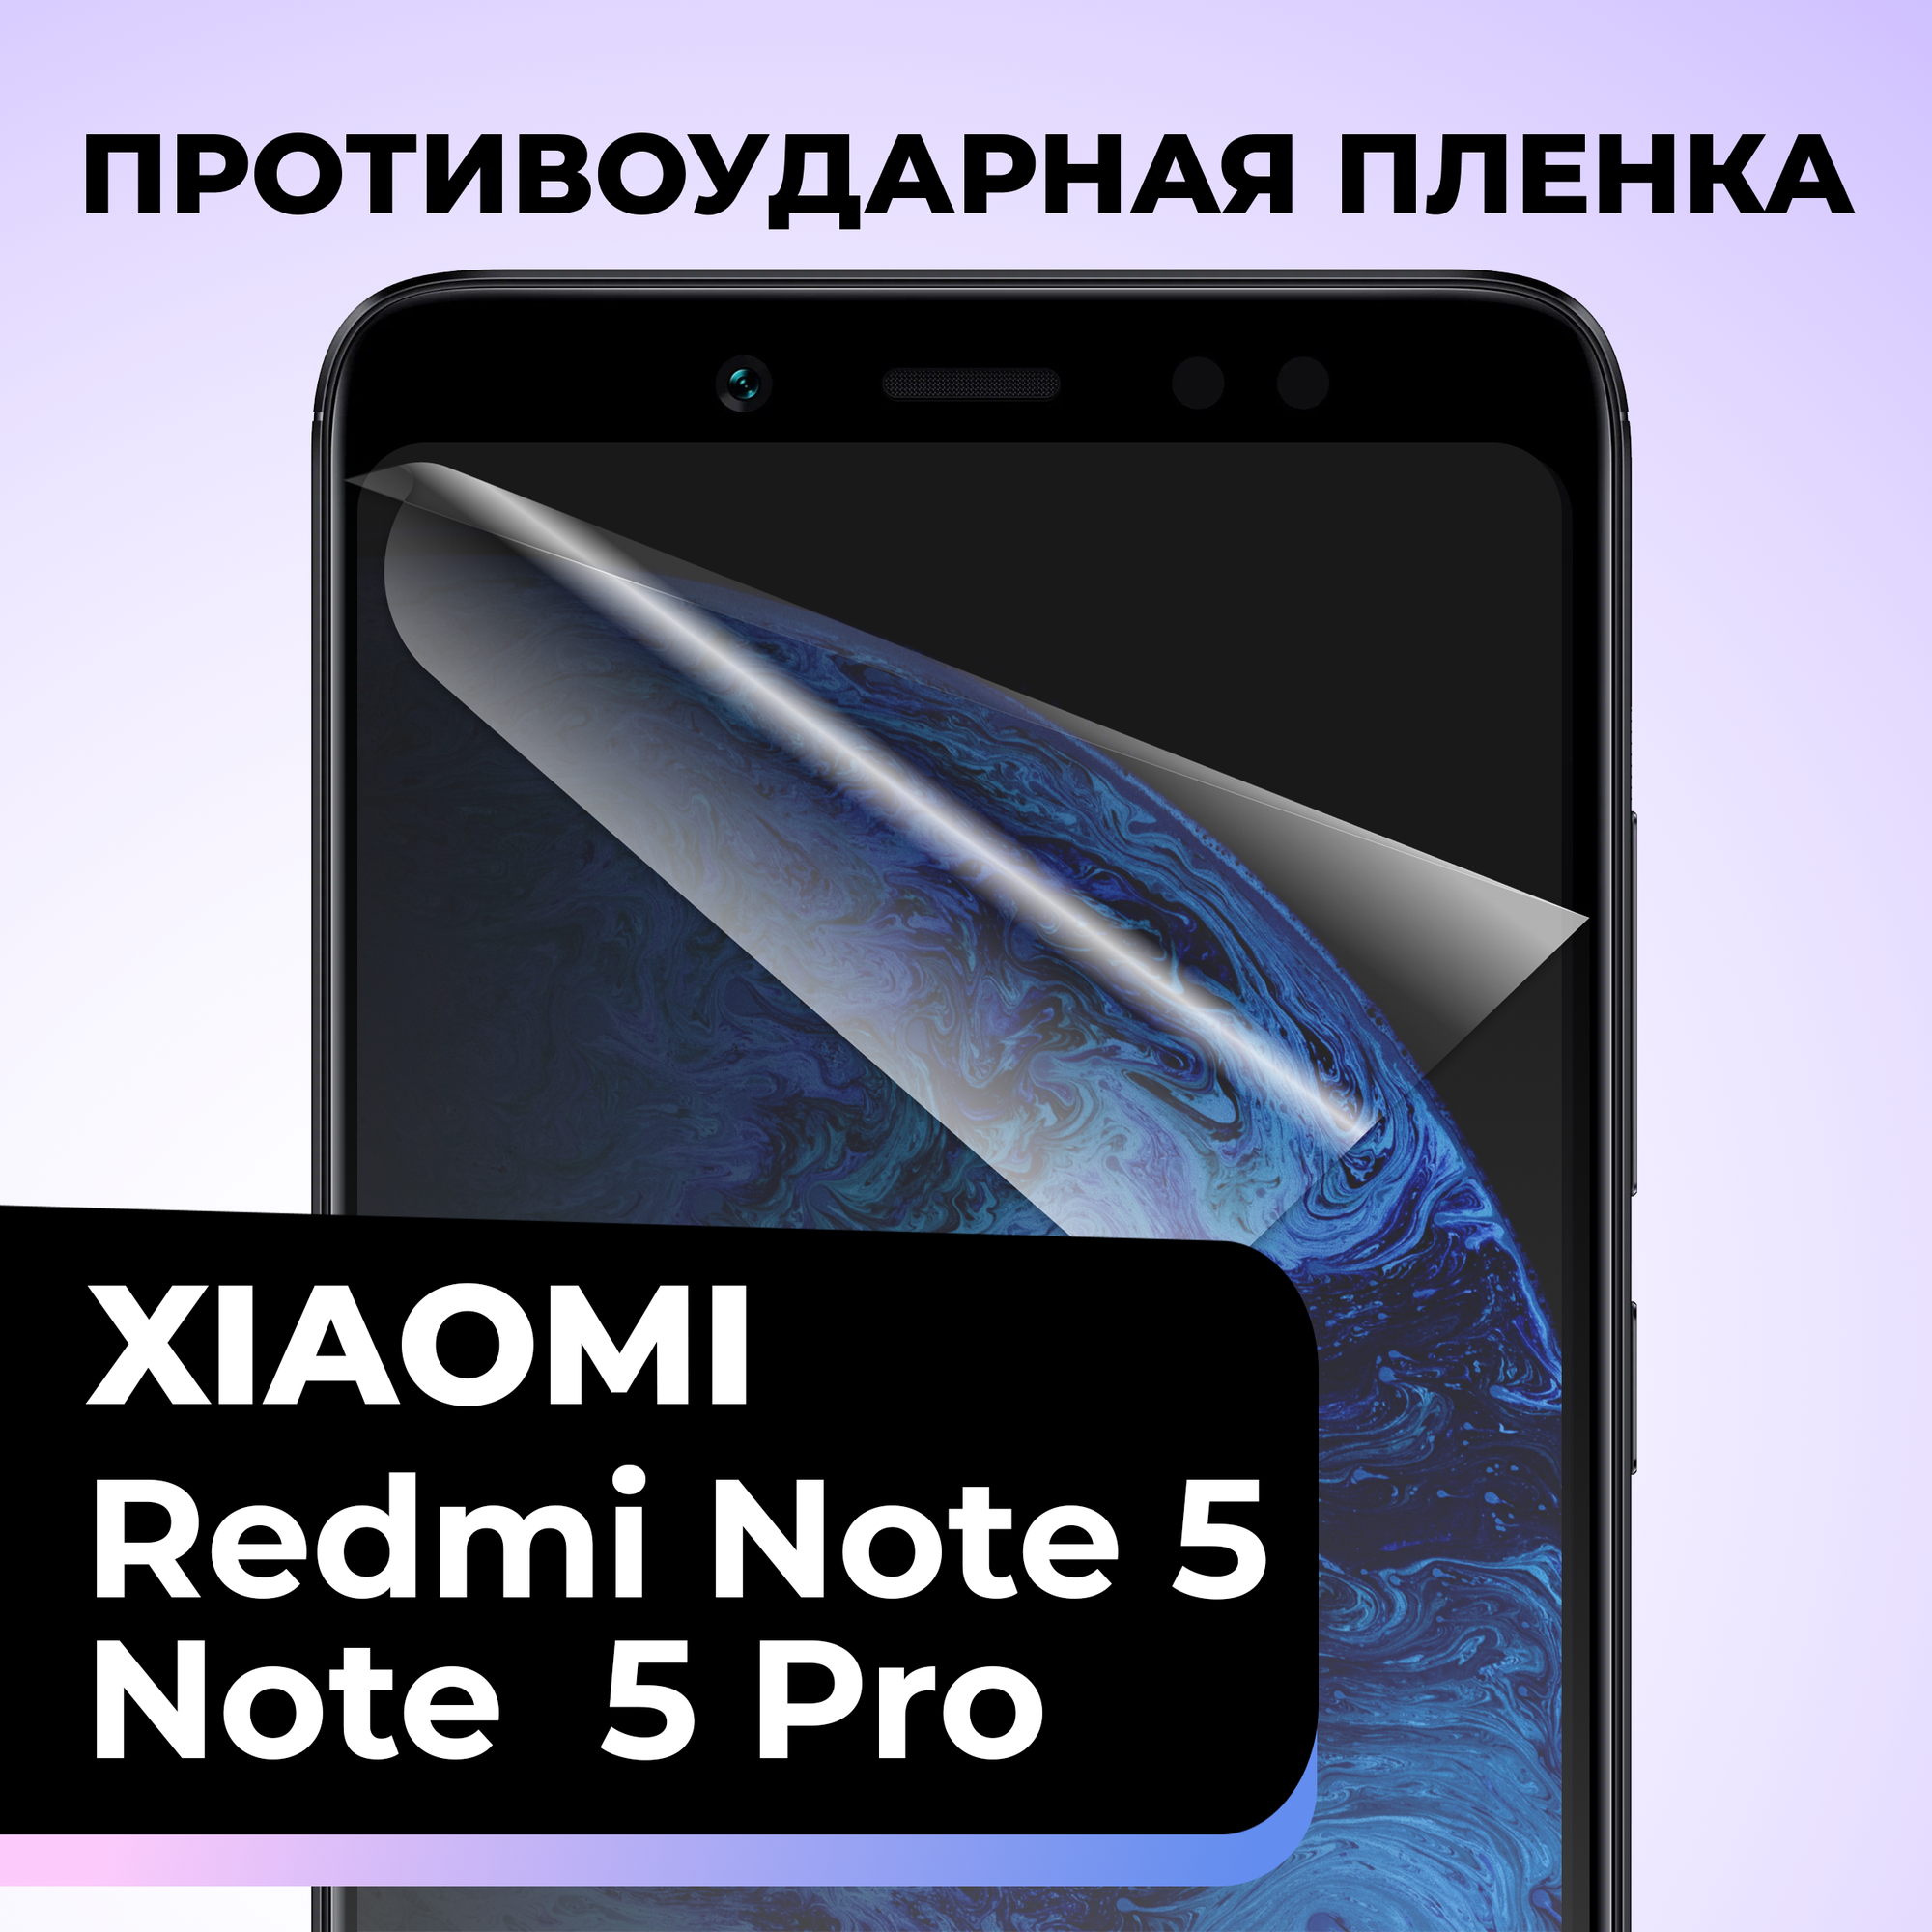 Комплект 2 шт. Самовосстанавливающаяся гидрогелевая защитная пленка для телефона Xiaomi Redmi Note 5, Note 5 Pro / Защитная пленка на смартфон Сяоми Редми Нот 5, Нот 5 Про